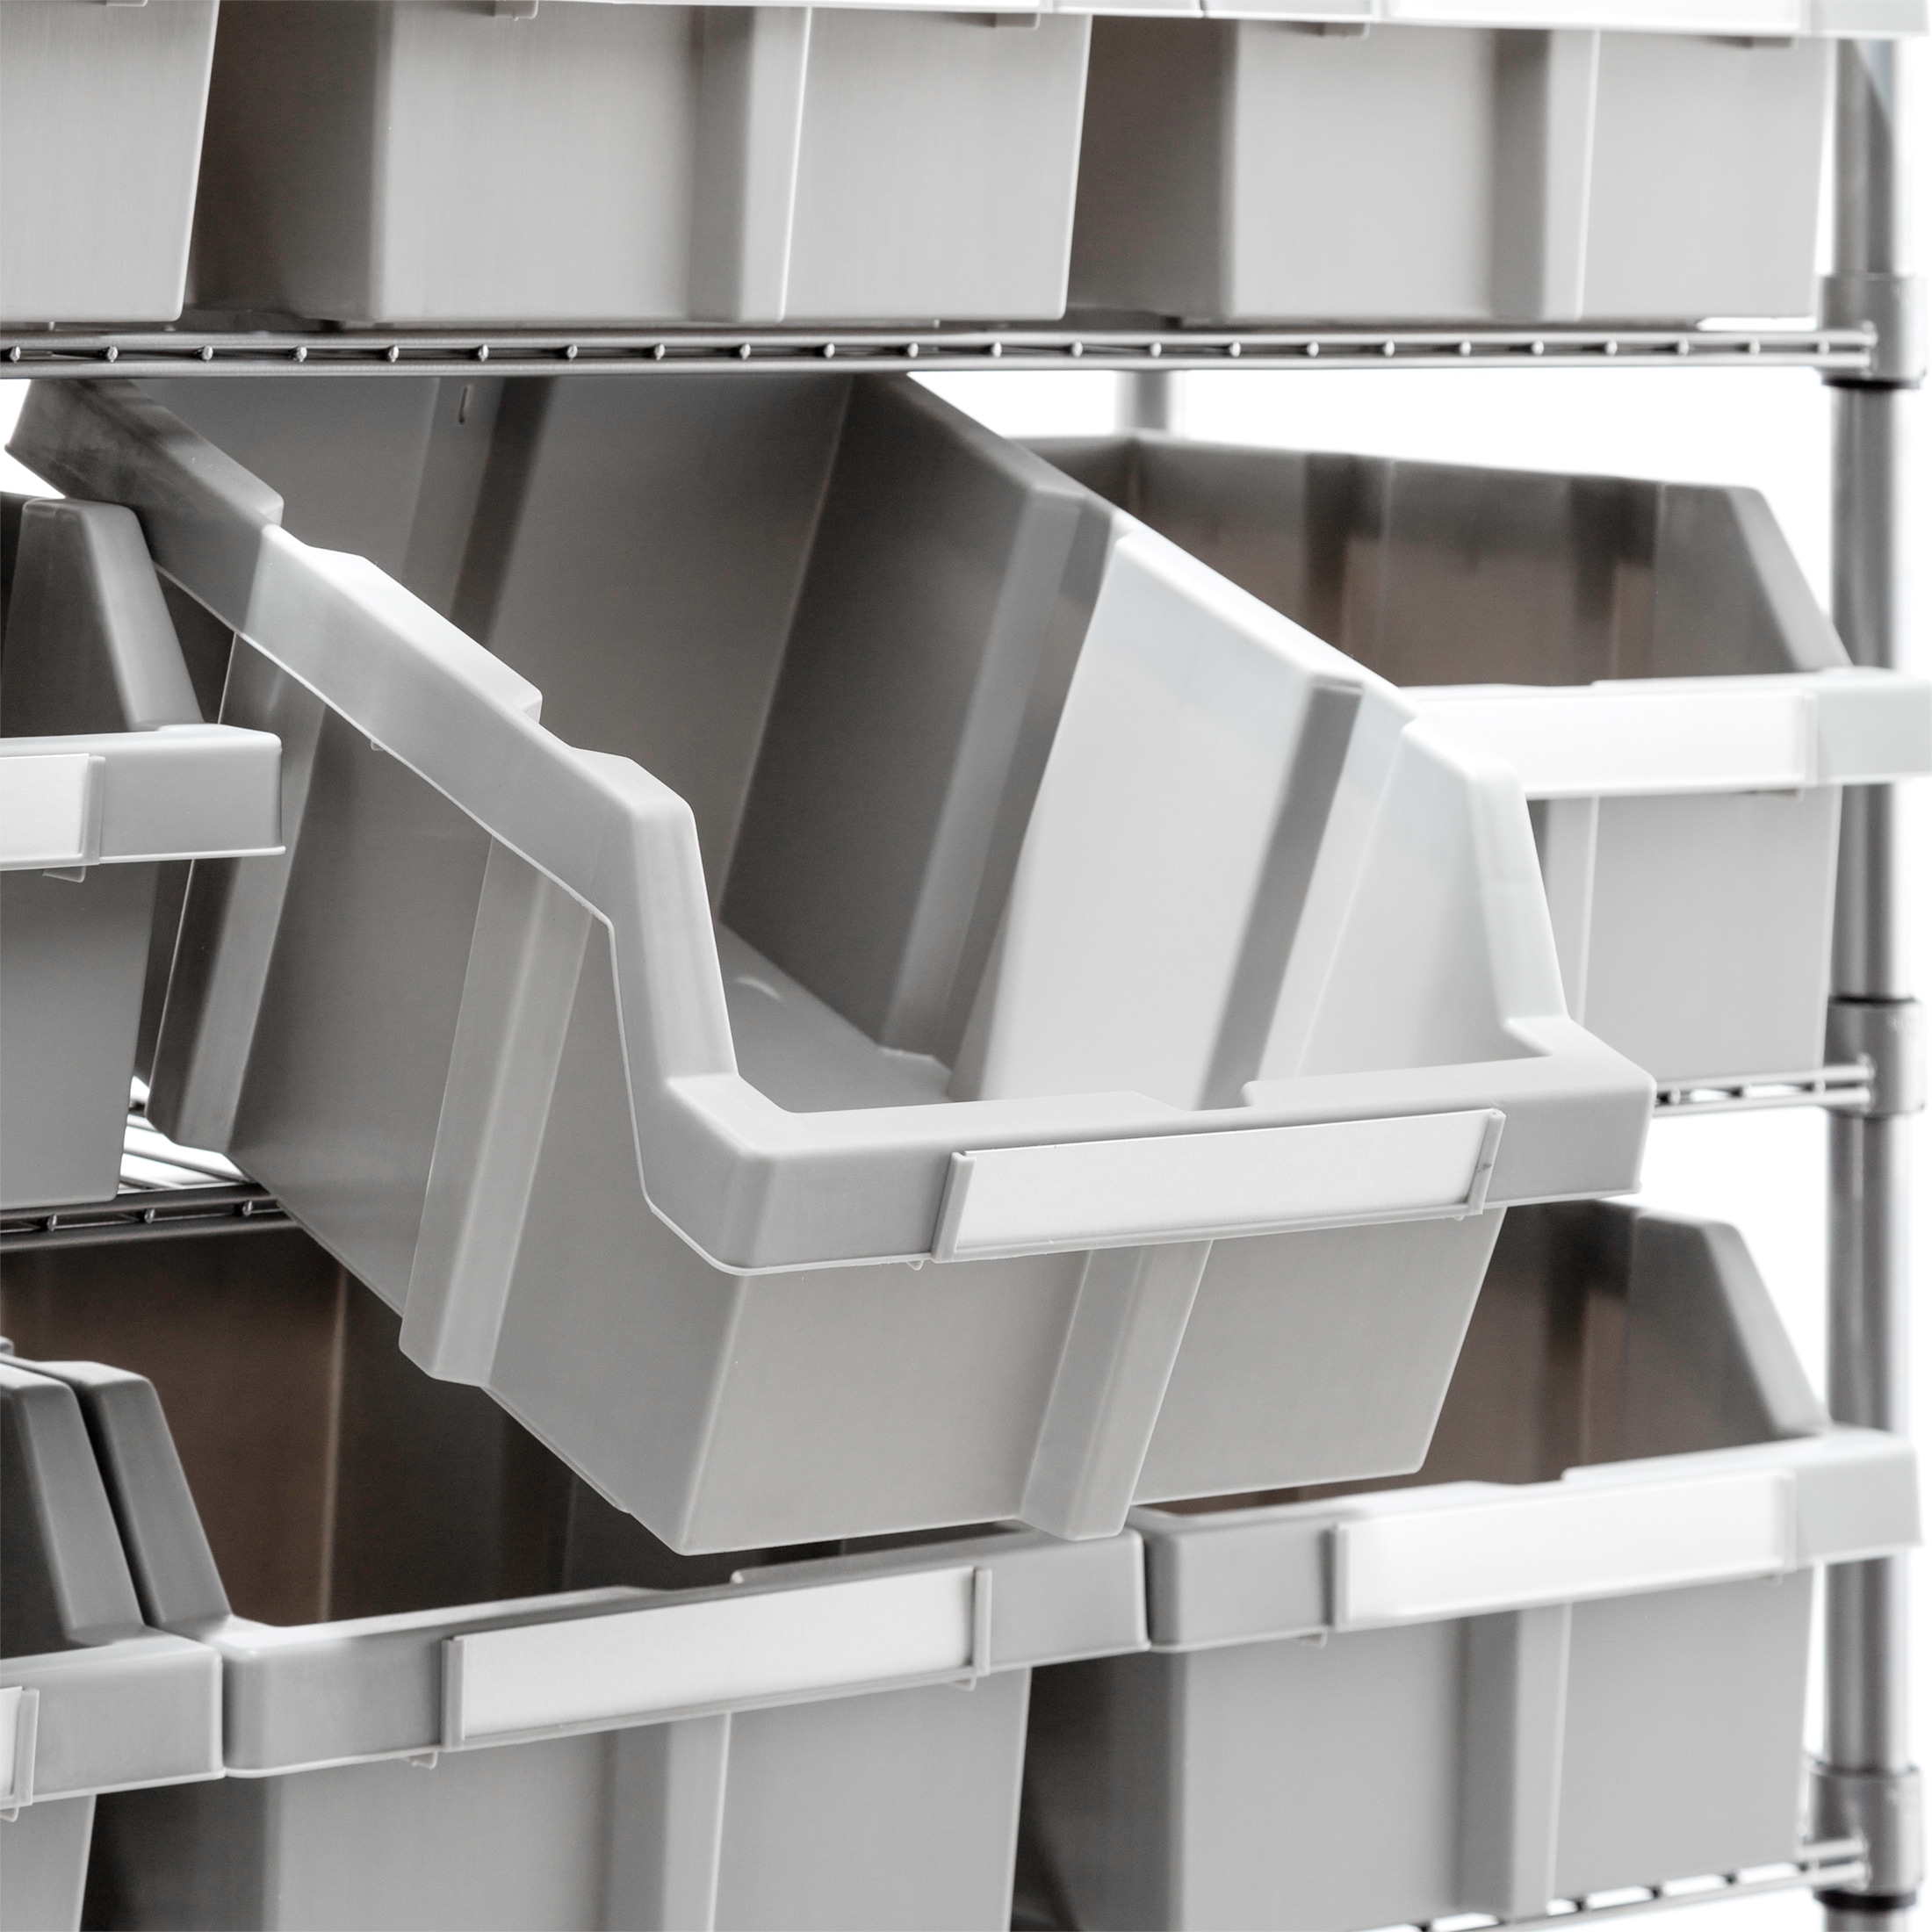 King's Rack Bin Rack Boltless Steel Storage System Organizer w/ 12 Plastic  Bins in 4 tiers